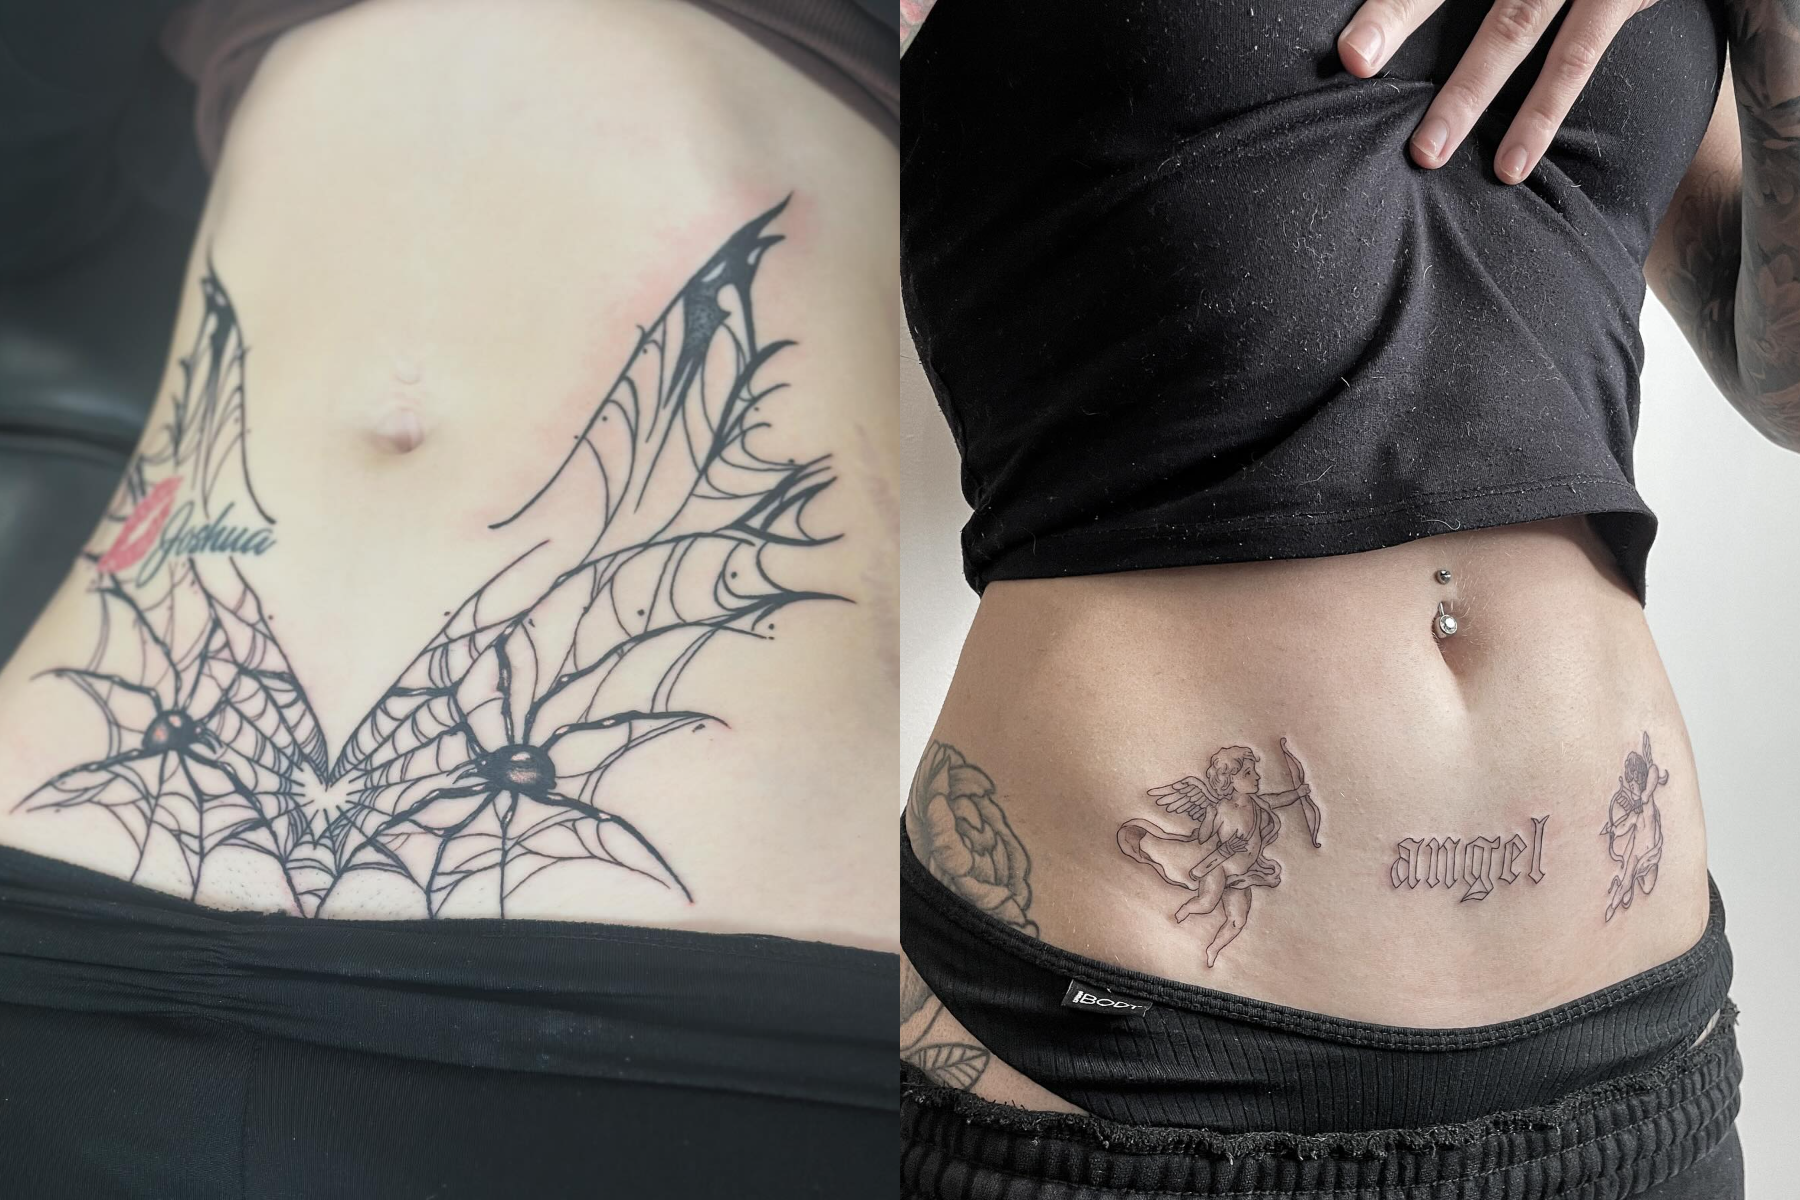 Ladies in black are showcasing their lower abdomen tattoos